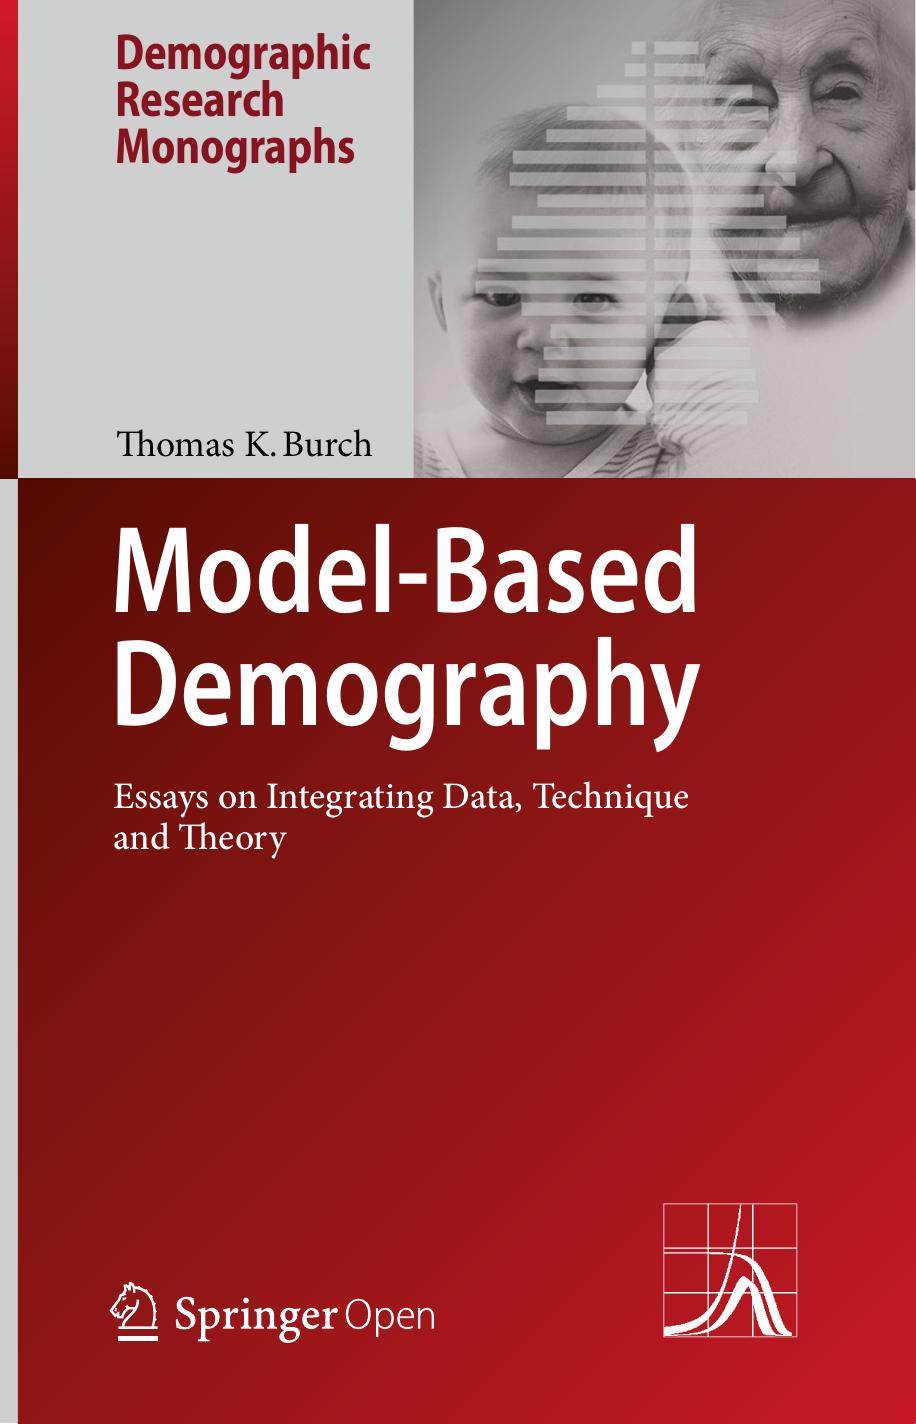 Model-Based Demography by Thomas K. Burch